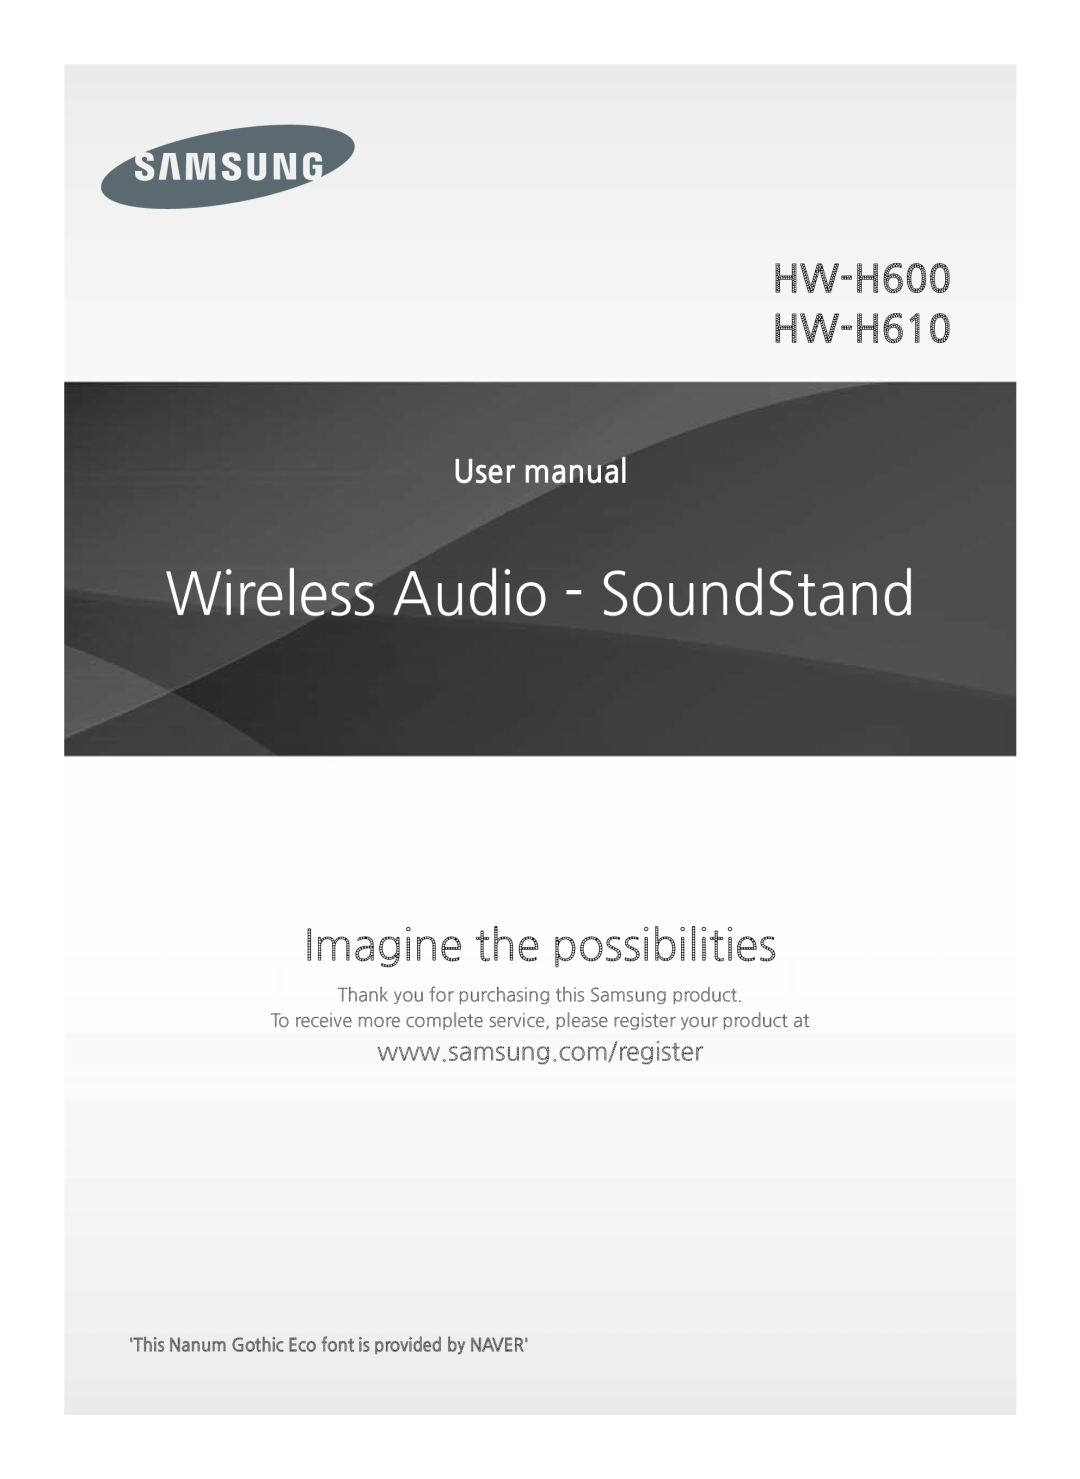 Samsung HW-H600/ZA manual Wireless Audio - SoundStand, Imagine the possibilities, HW-H600 HW-H610 